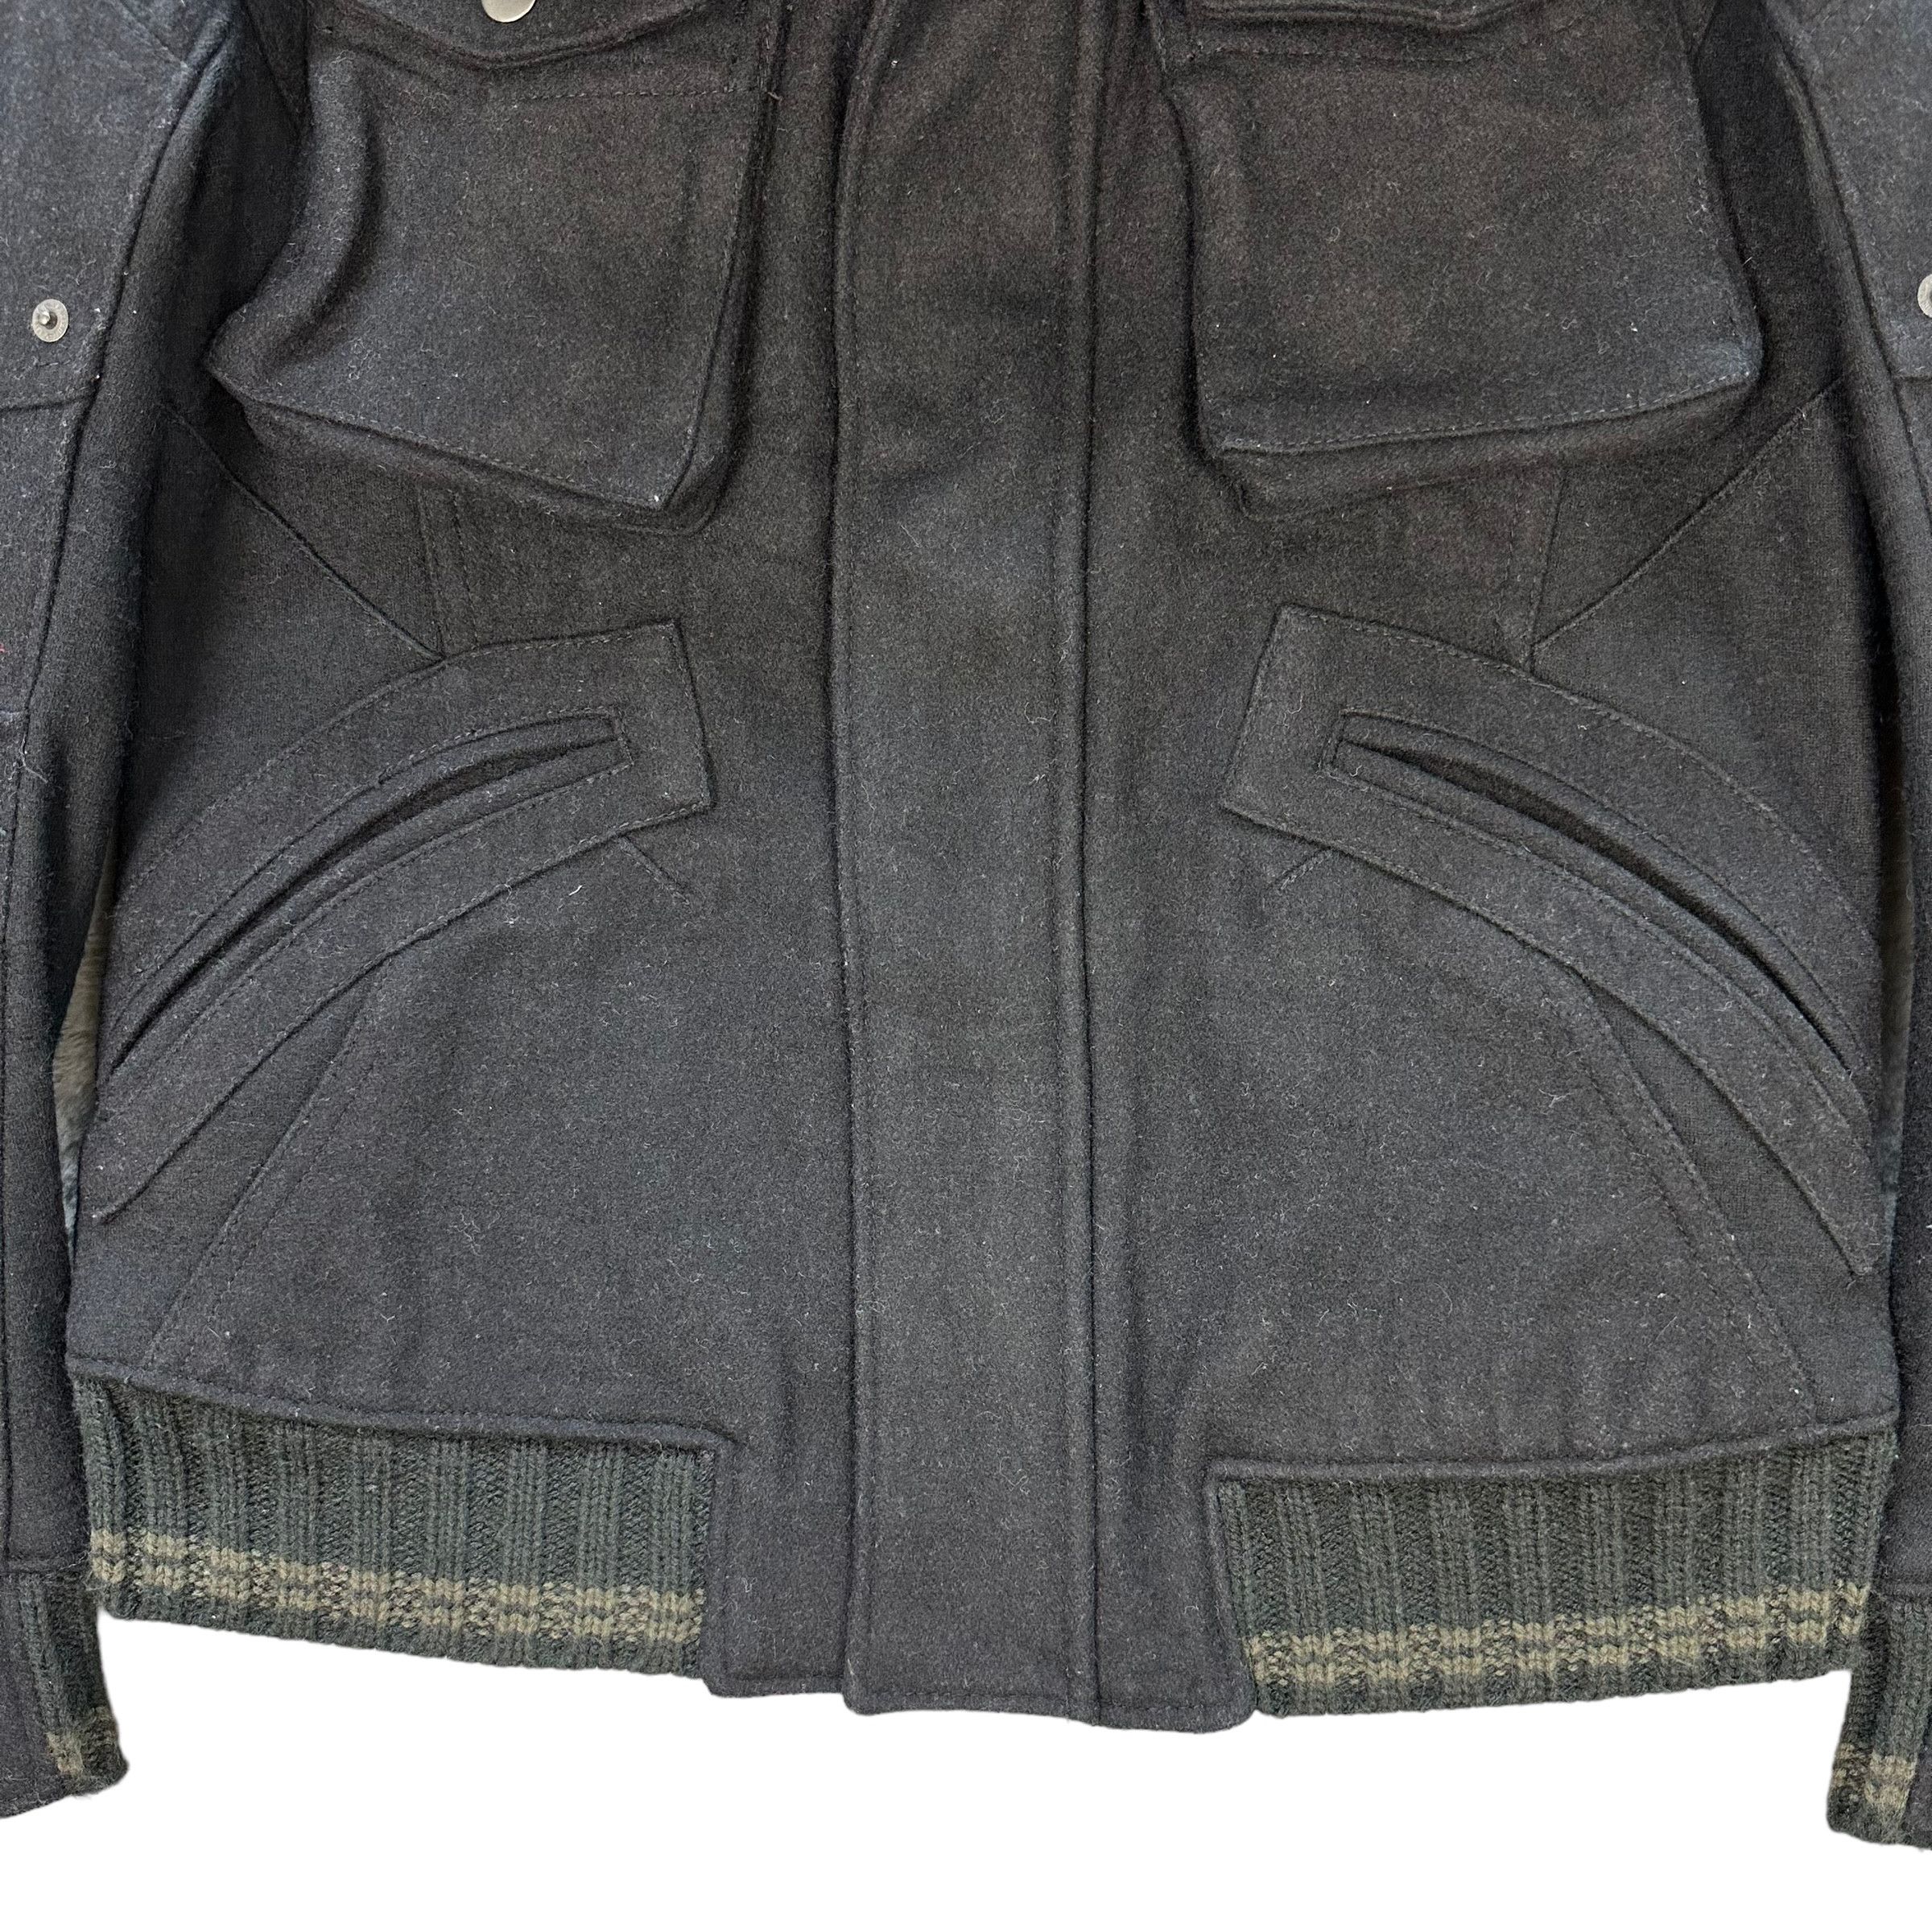 Vintage - PPFM Four Pocket High Collared Wool Jacket #9137-61 - 3